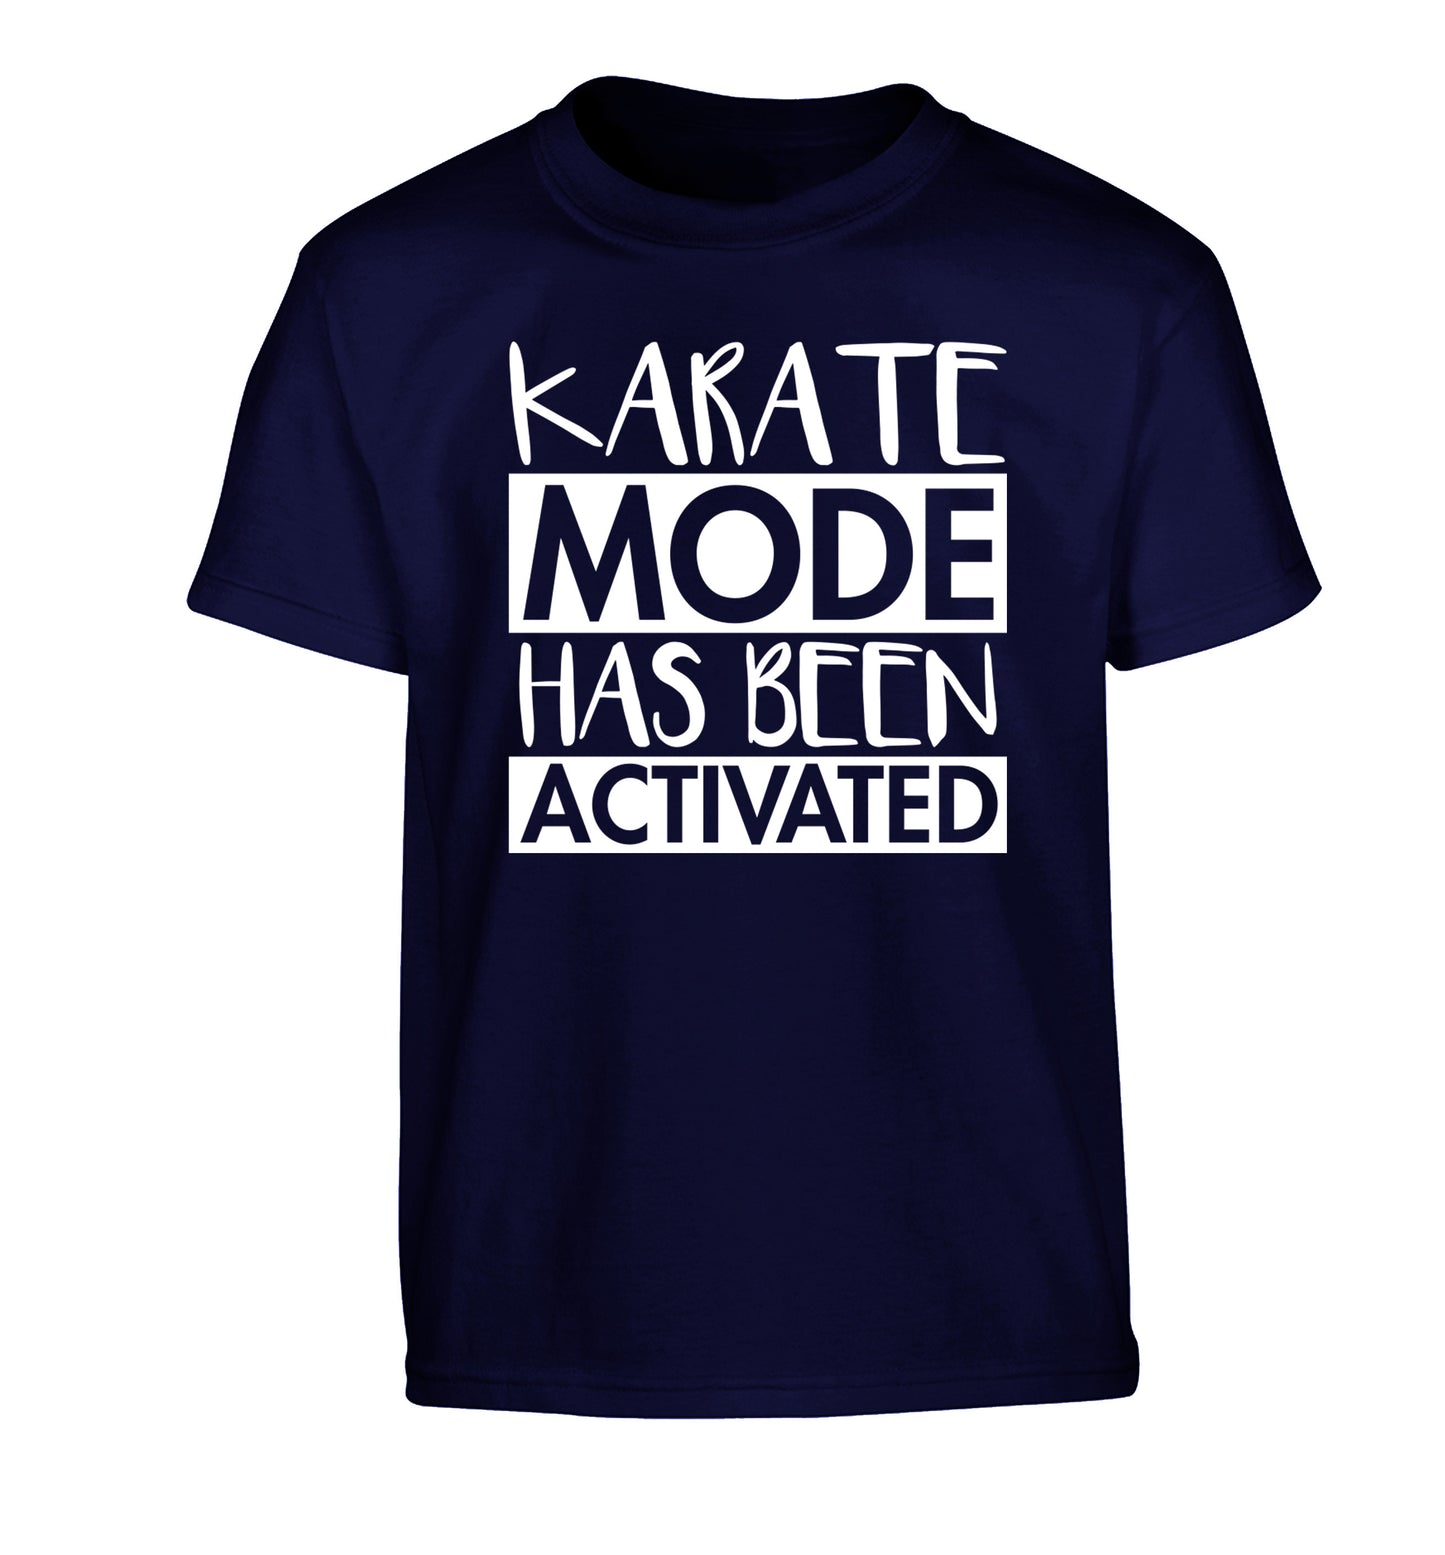 Karate mode activated Children's navy Tshirt 12-14 Years